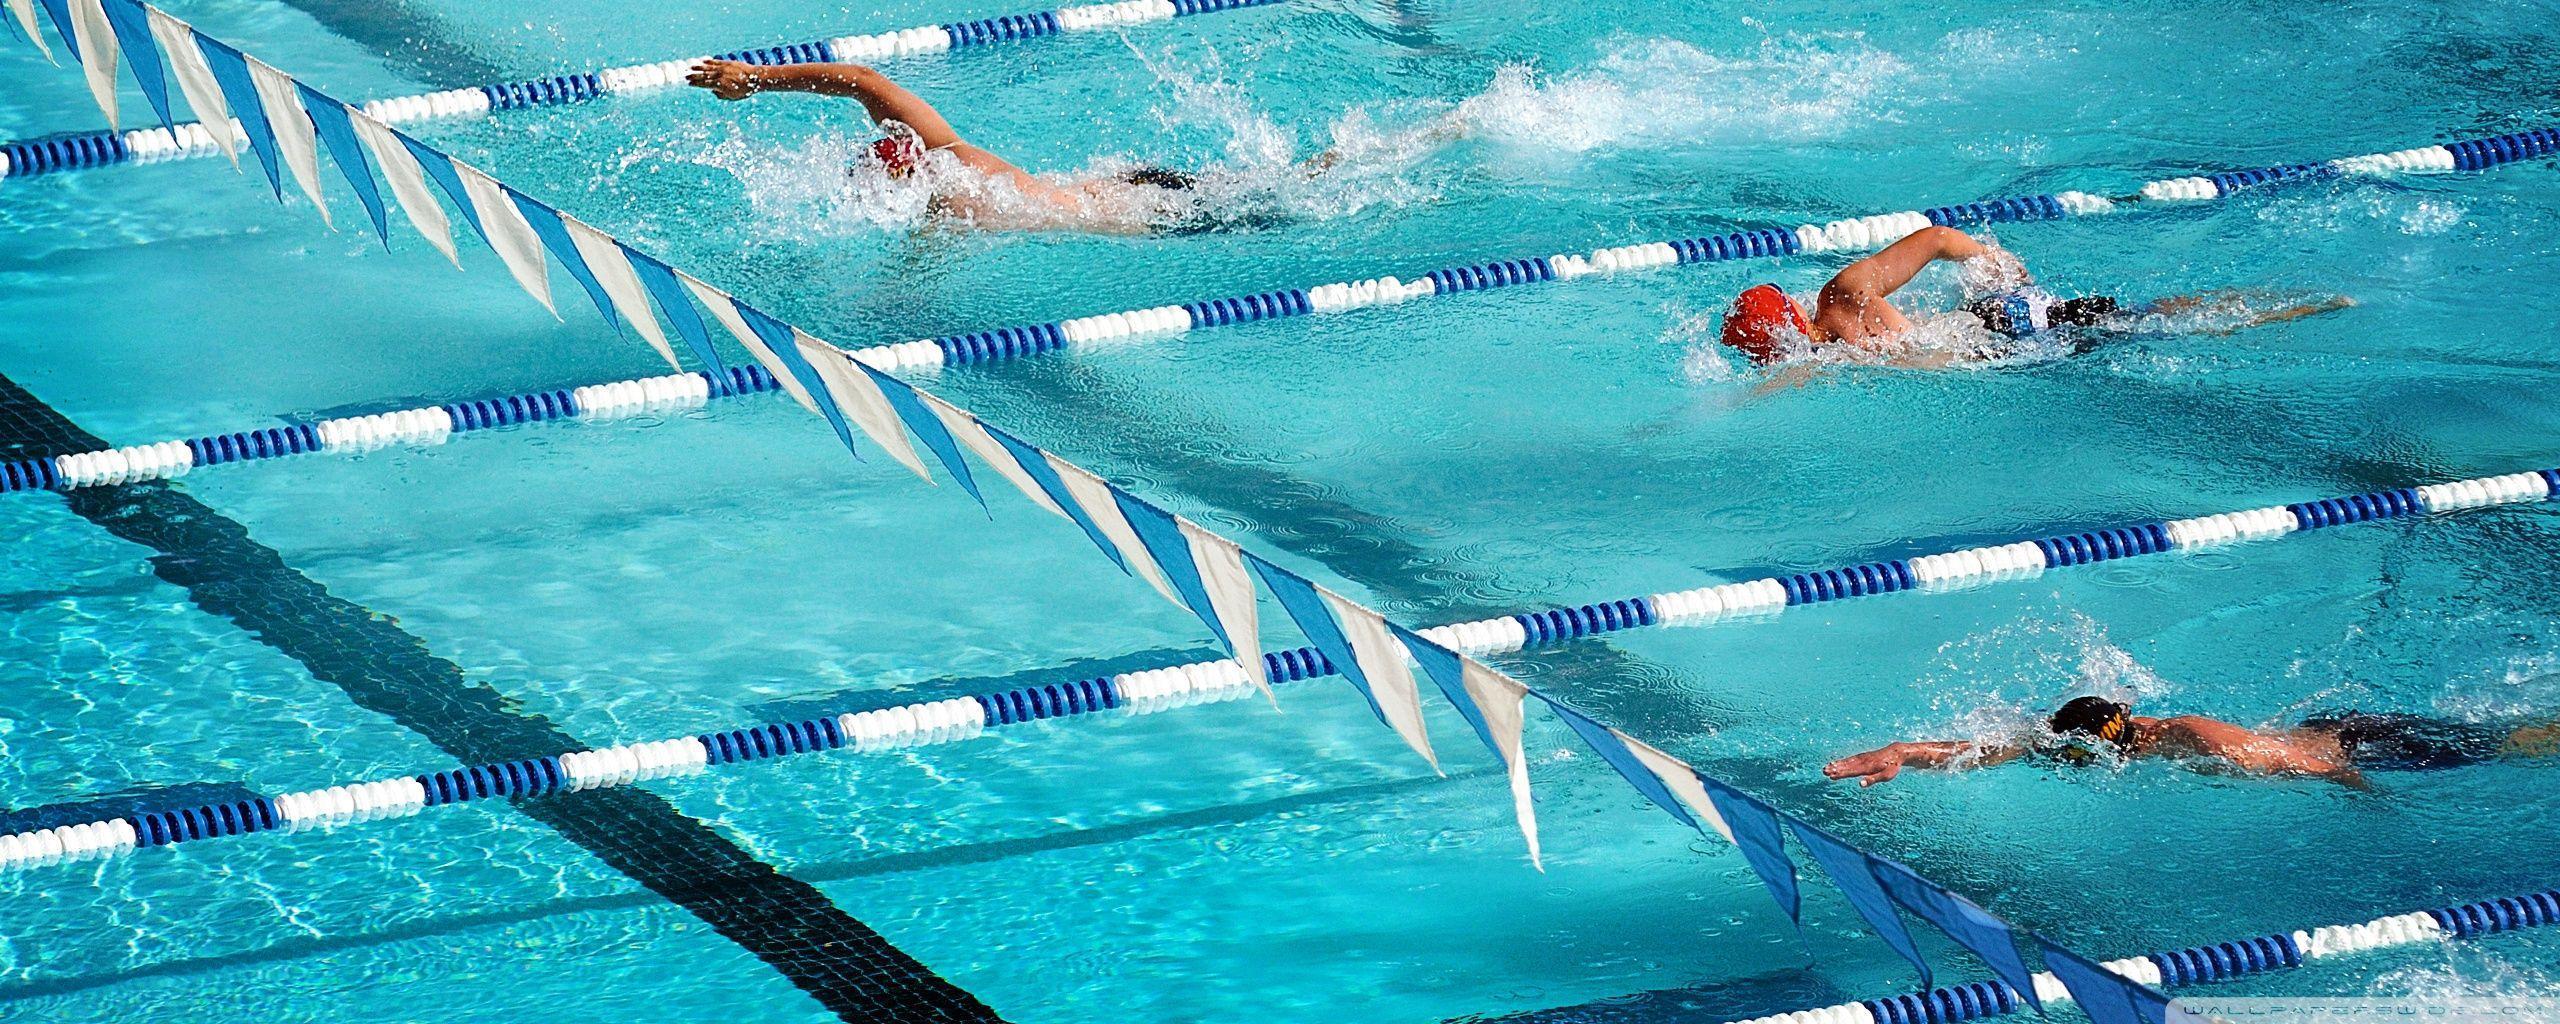 Olympic Swimming Pool HD desktop wallpaper, High Definition